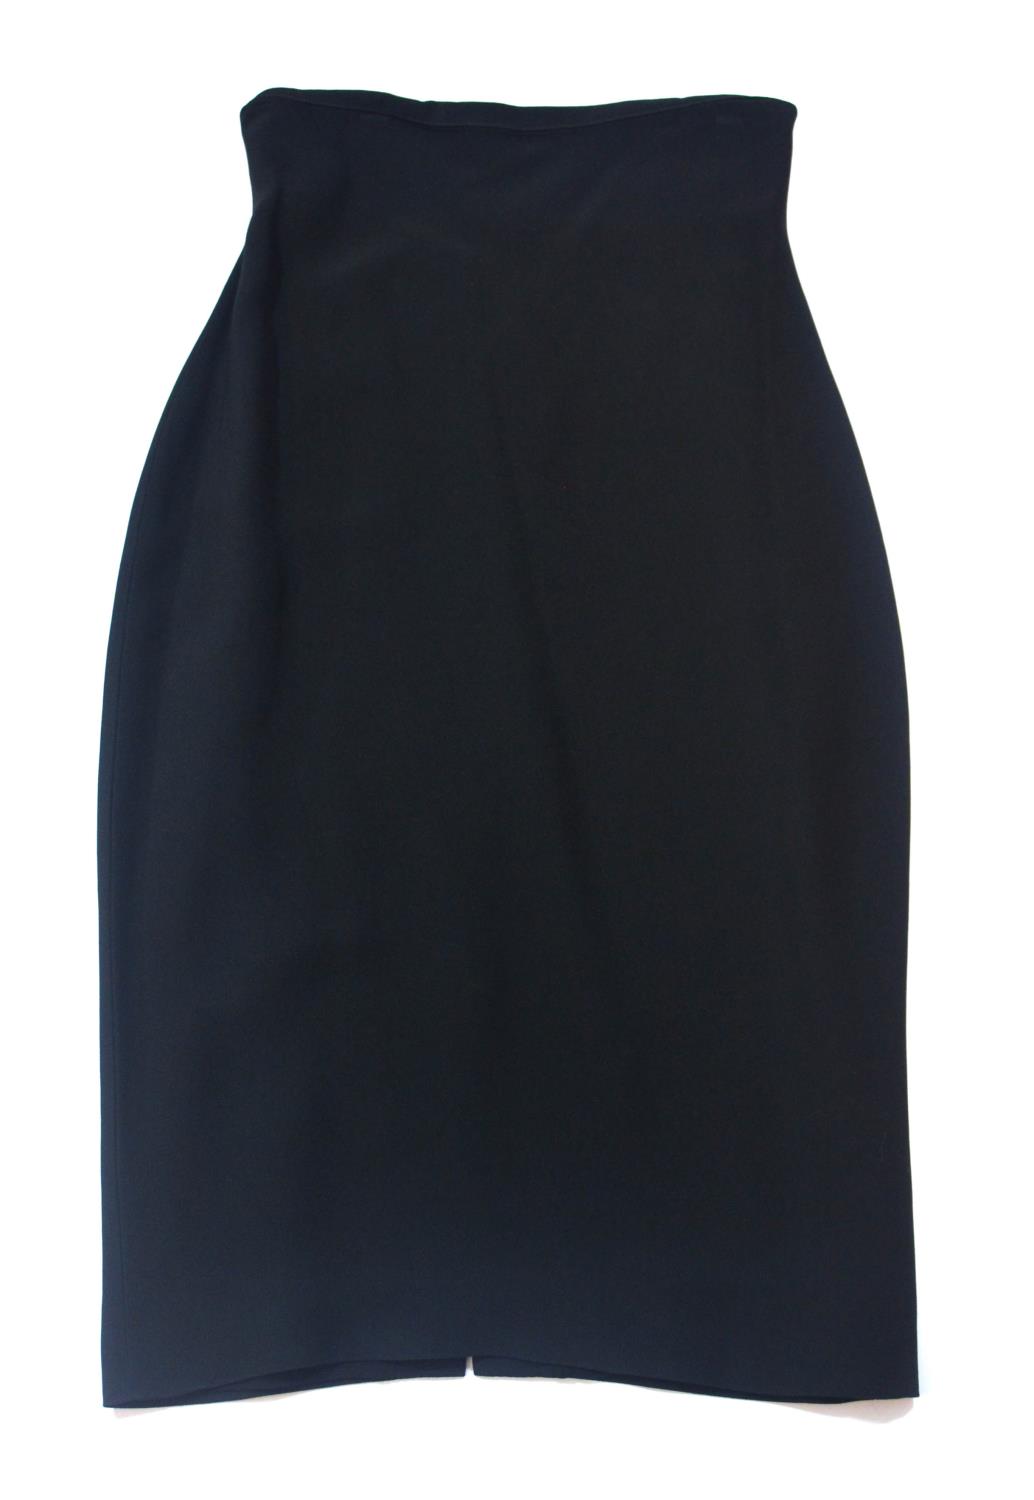 HHILLA NOCHE, BLACK VISCOSE BODYCON DRESS With back zip, strapless (size 10). A